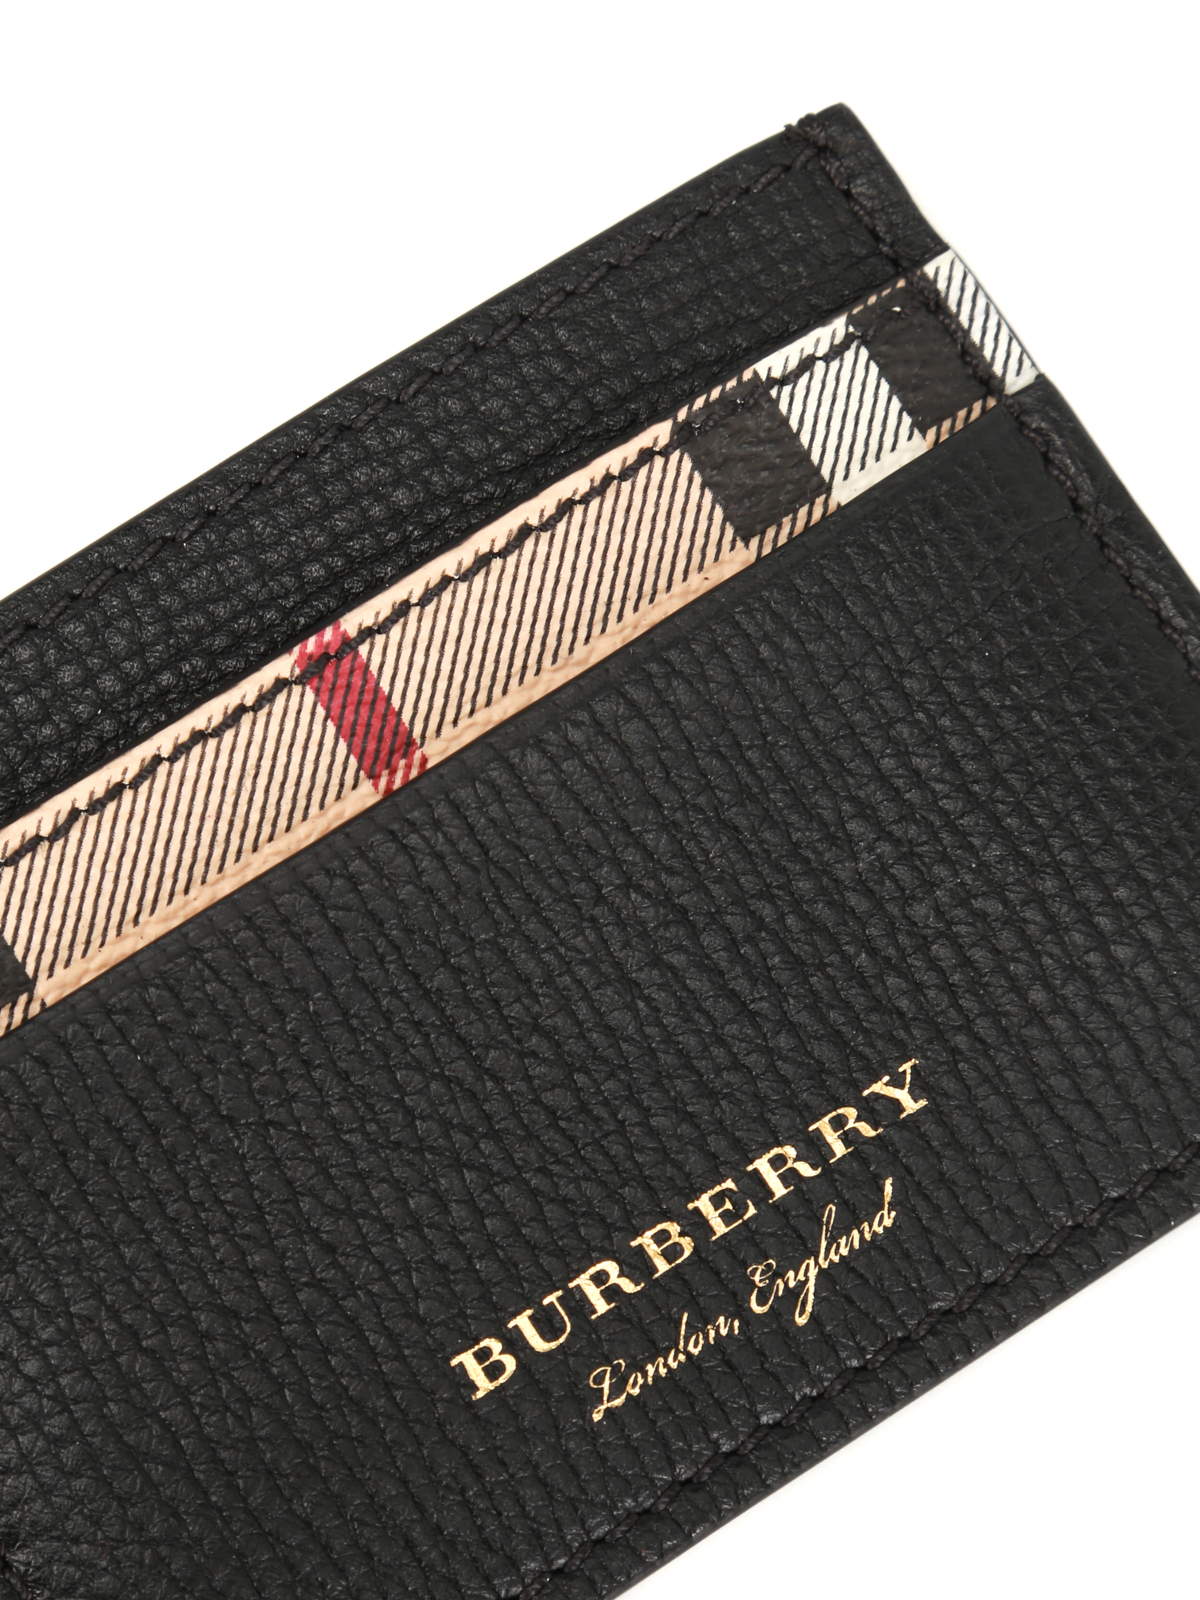 Burberry Name Card Holder Belgium, SAVE 50% 